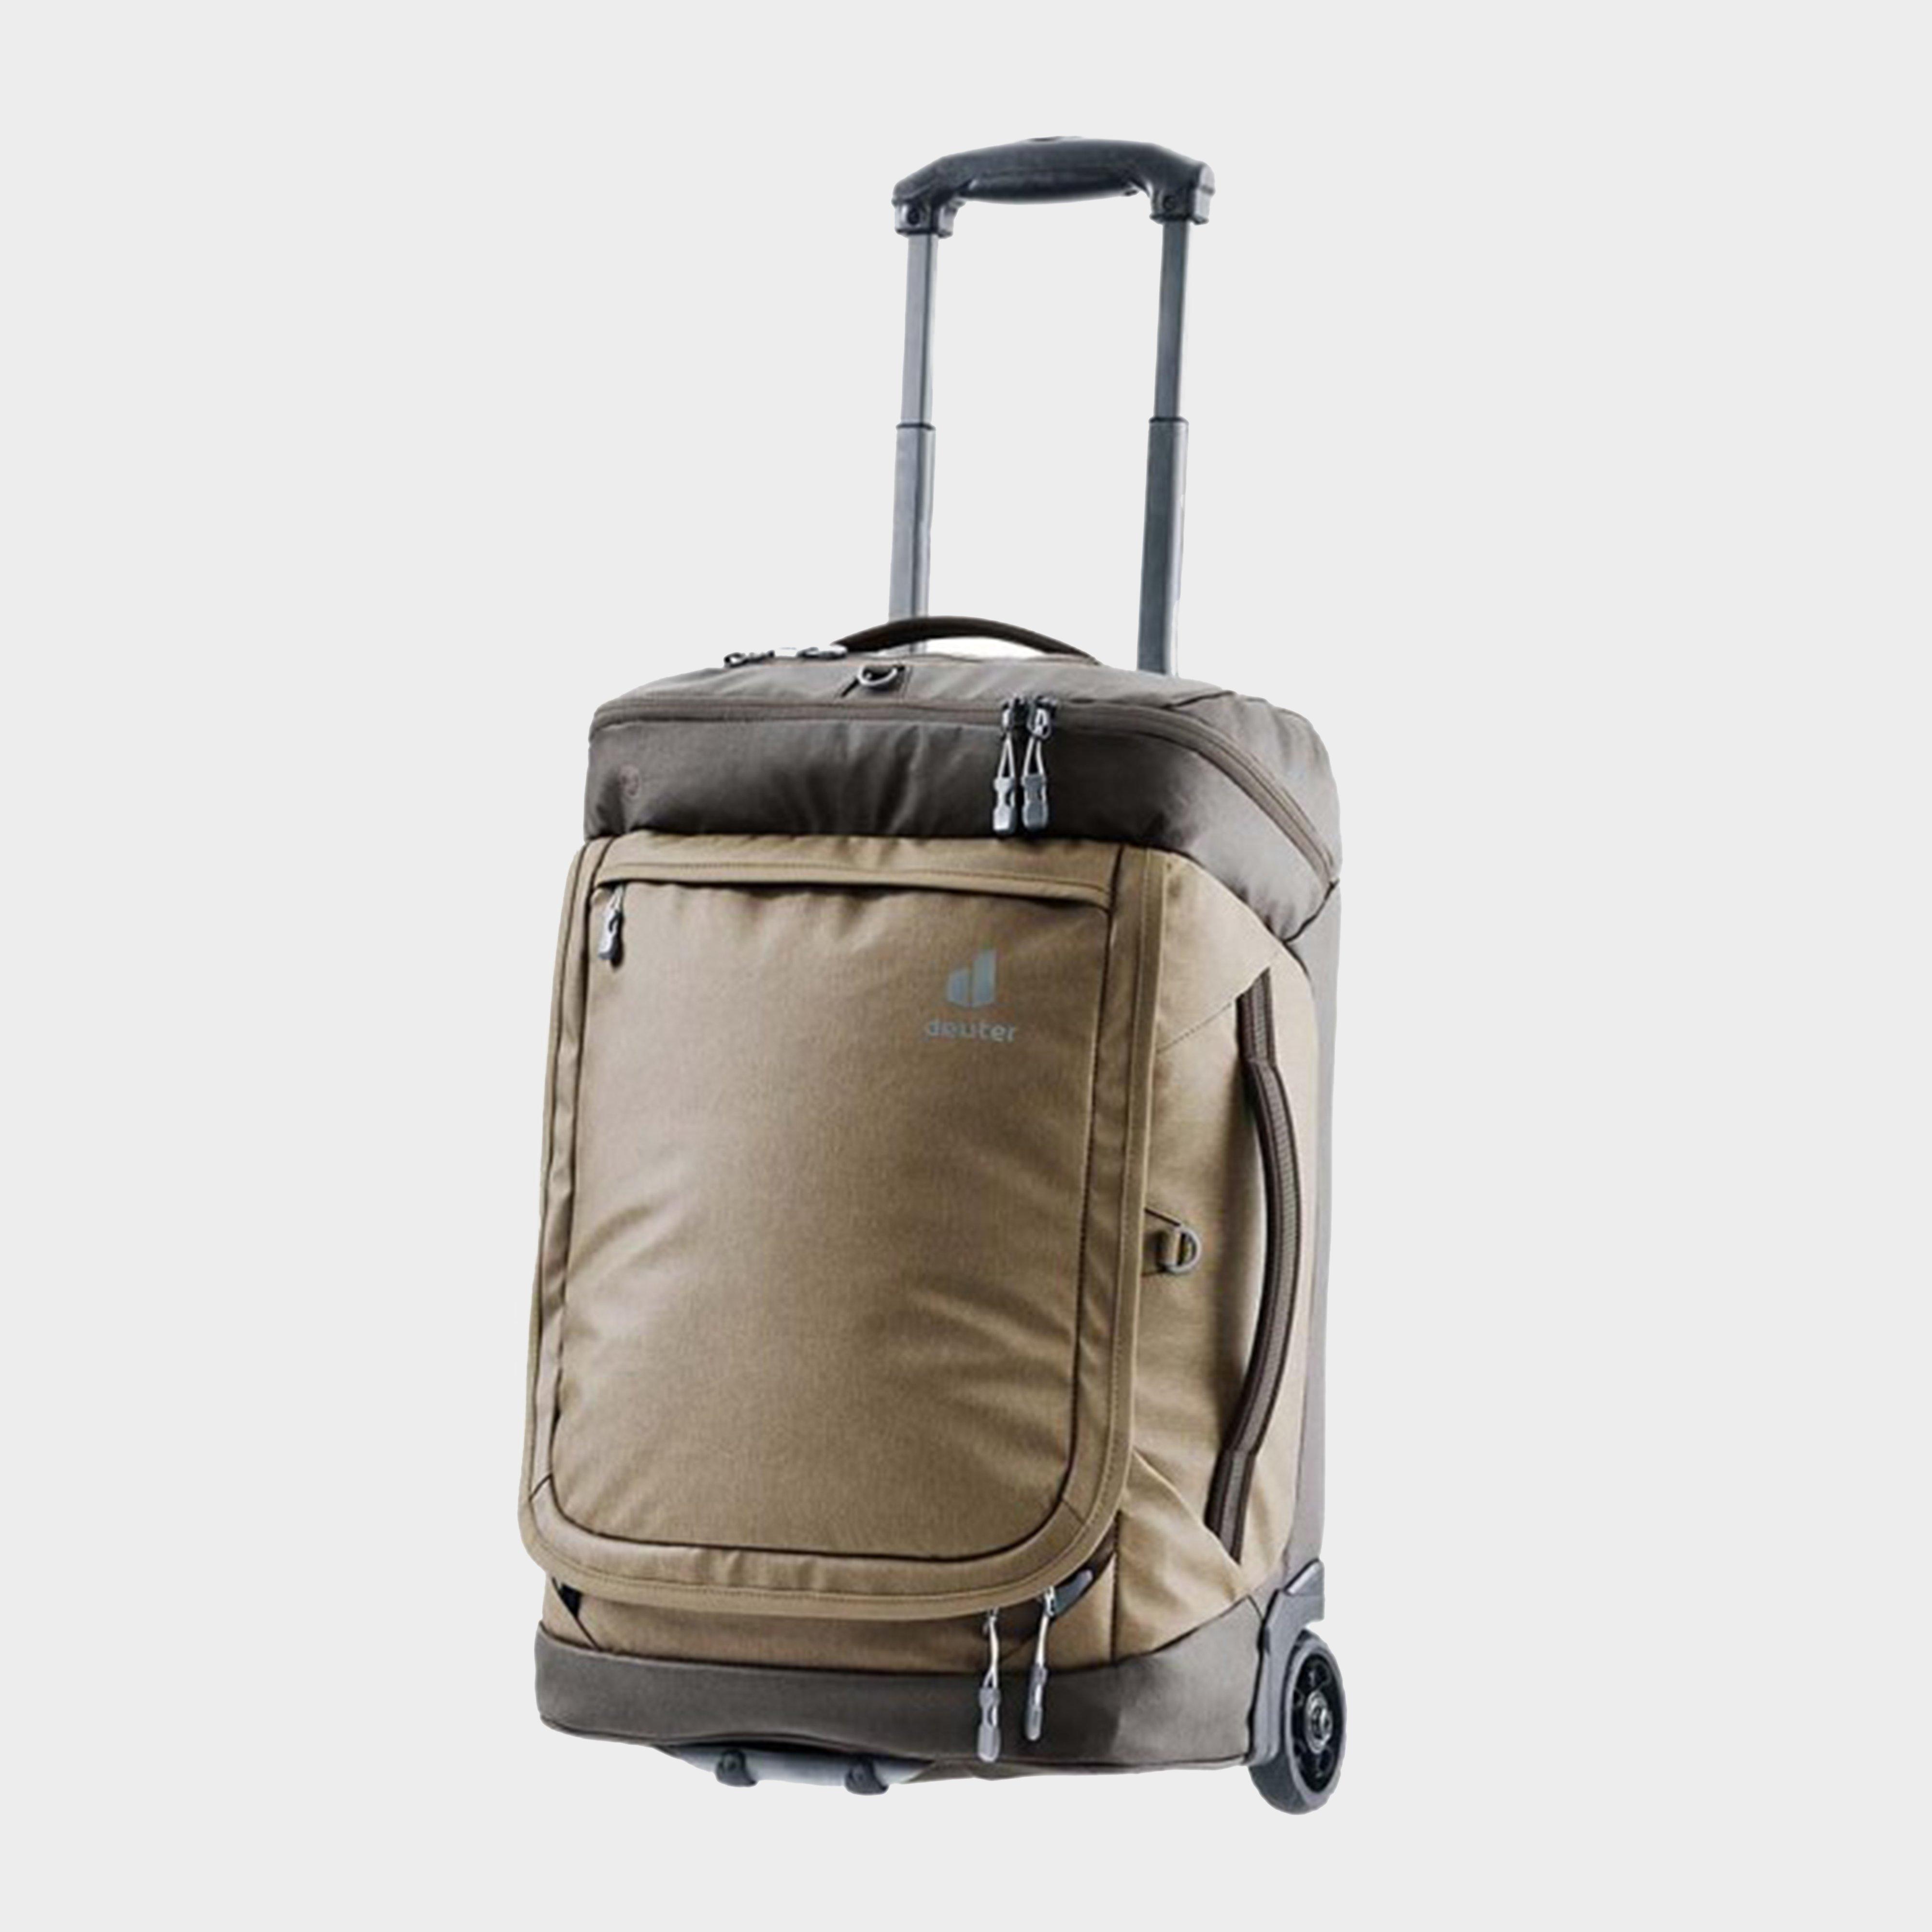 Deuter Aviant Duffel Pro Movo 36 Wheeled Luggage - Brown/brown  Brown/brown